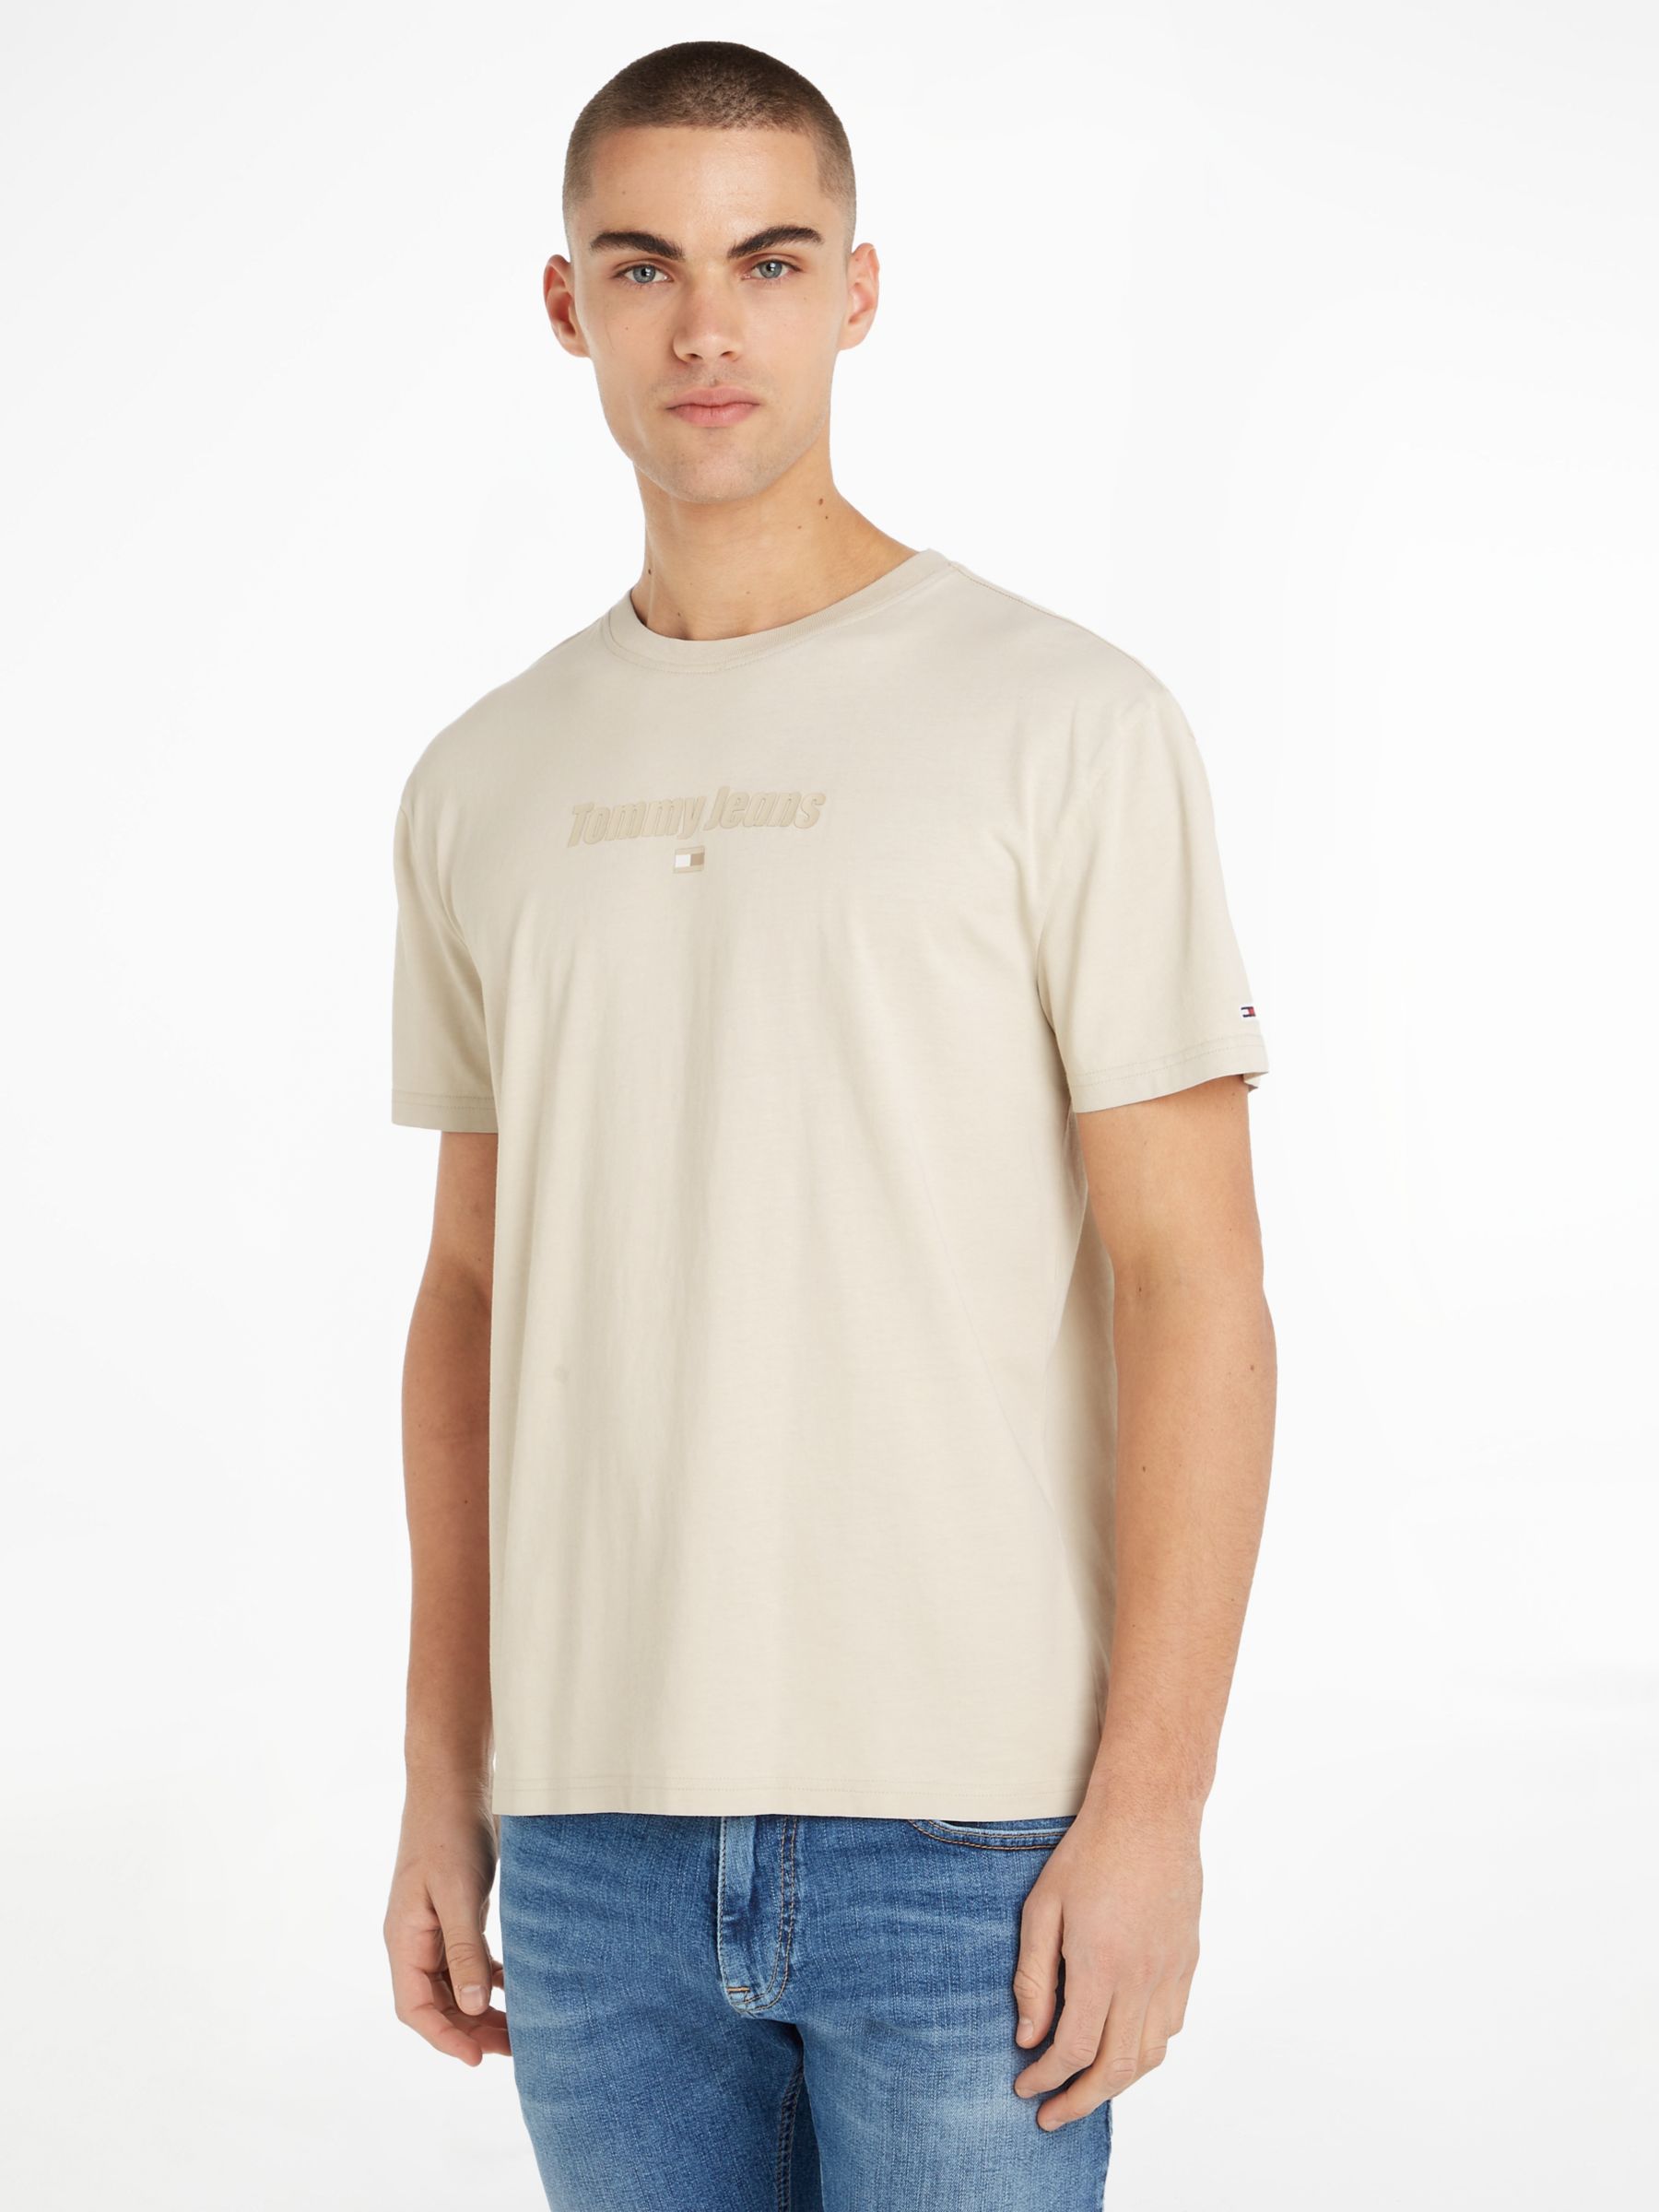 Tommy Jeans Tonal Linear Logo T-Shirt, Newsprint at John Lewis & Partners